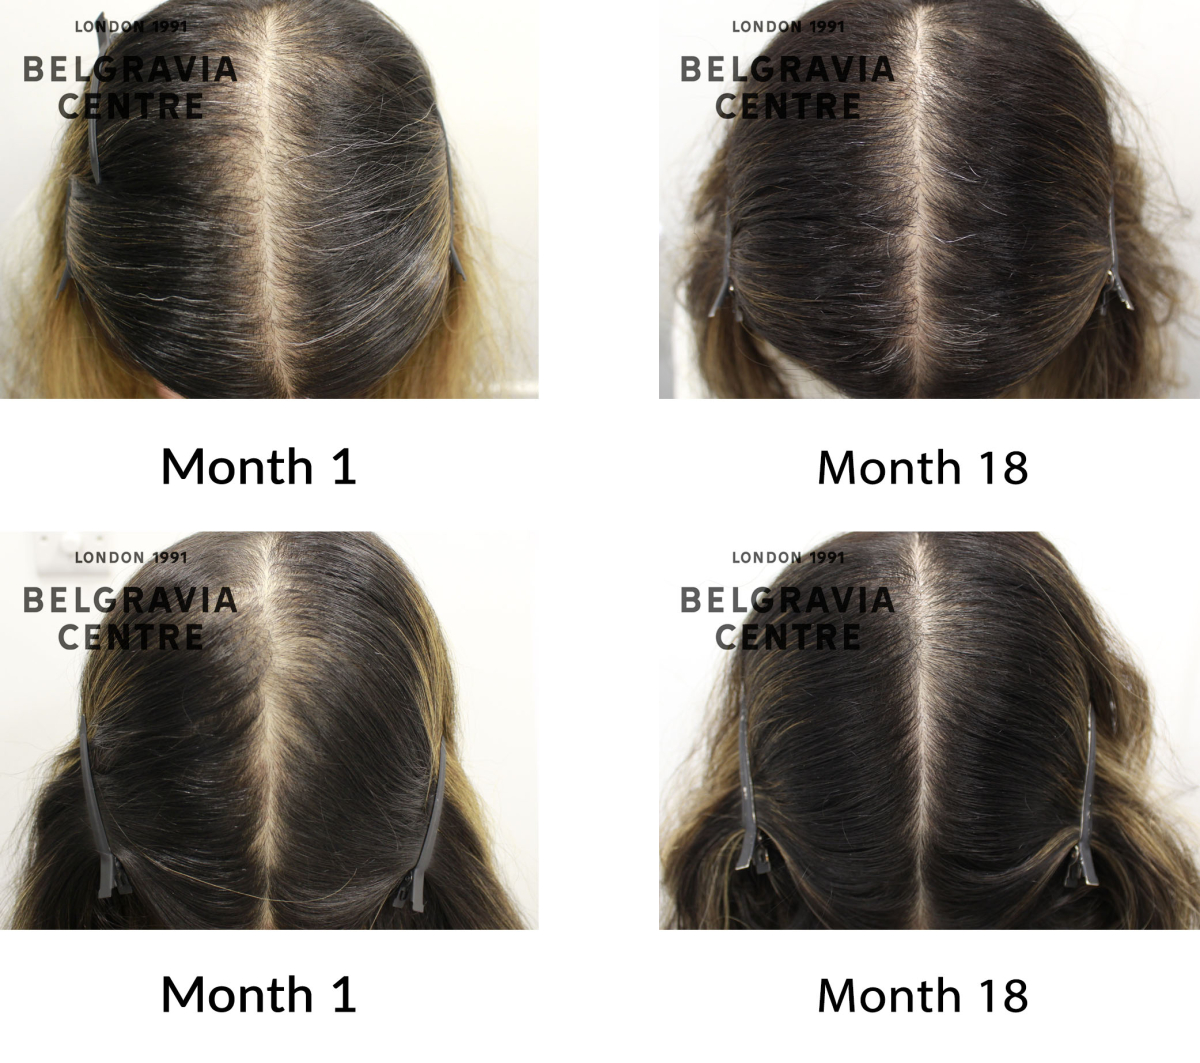 female pattern hair loss the belgravia centre 422063